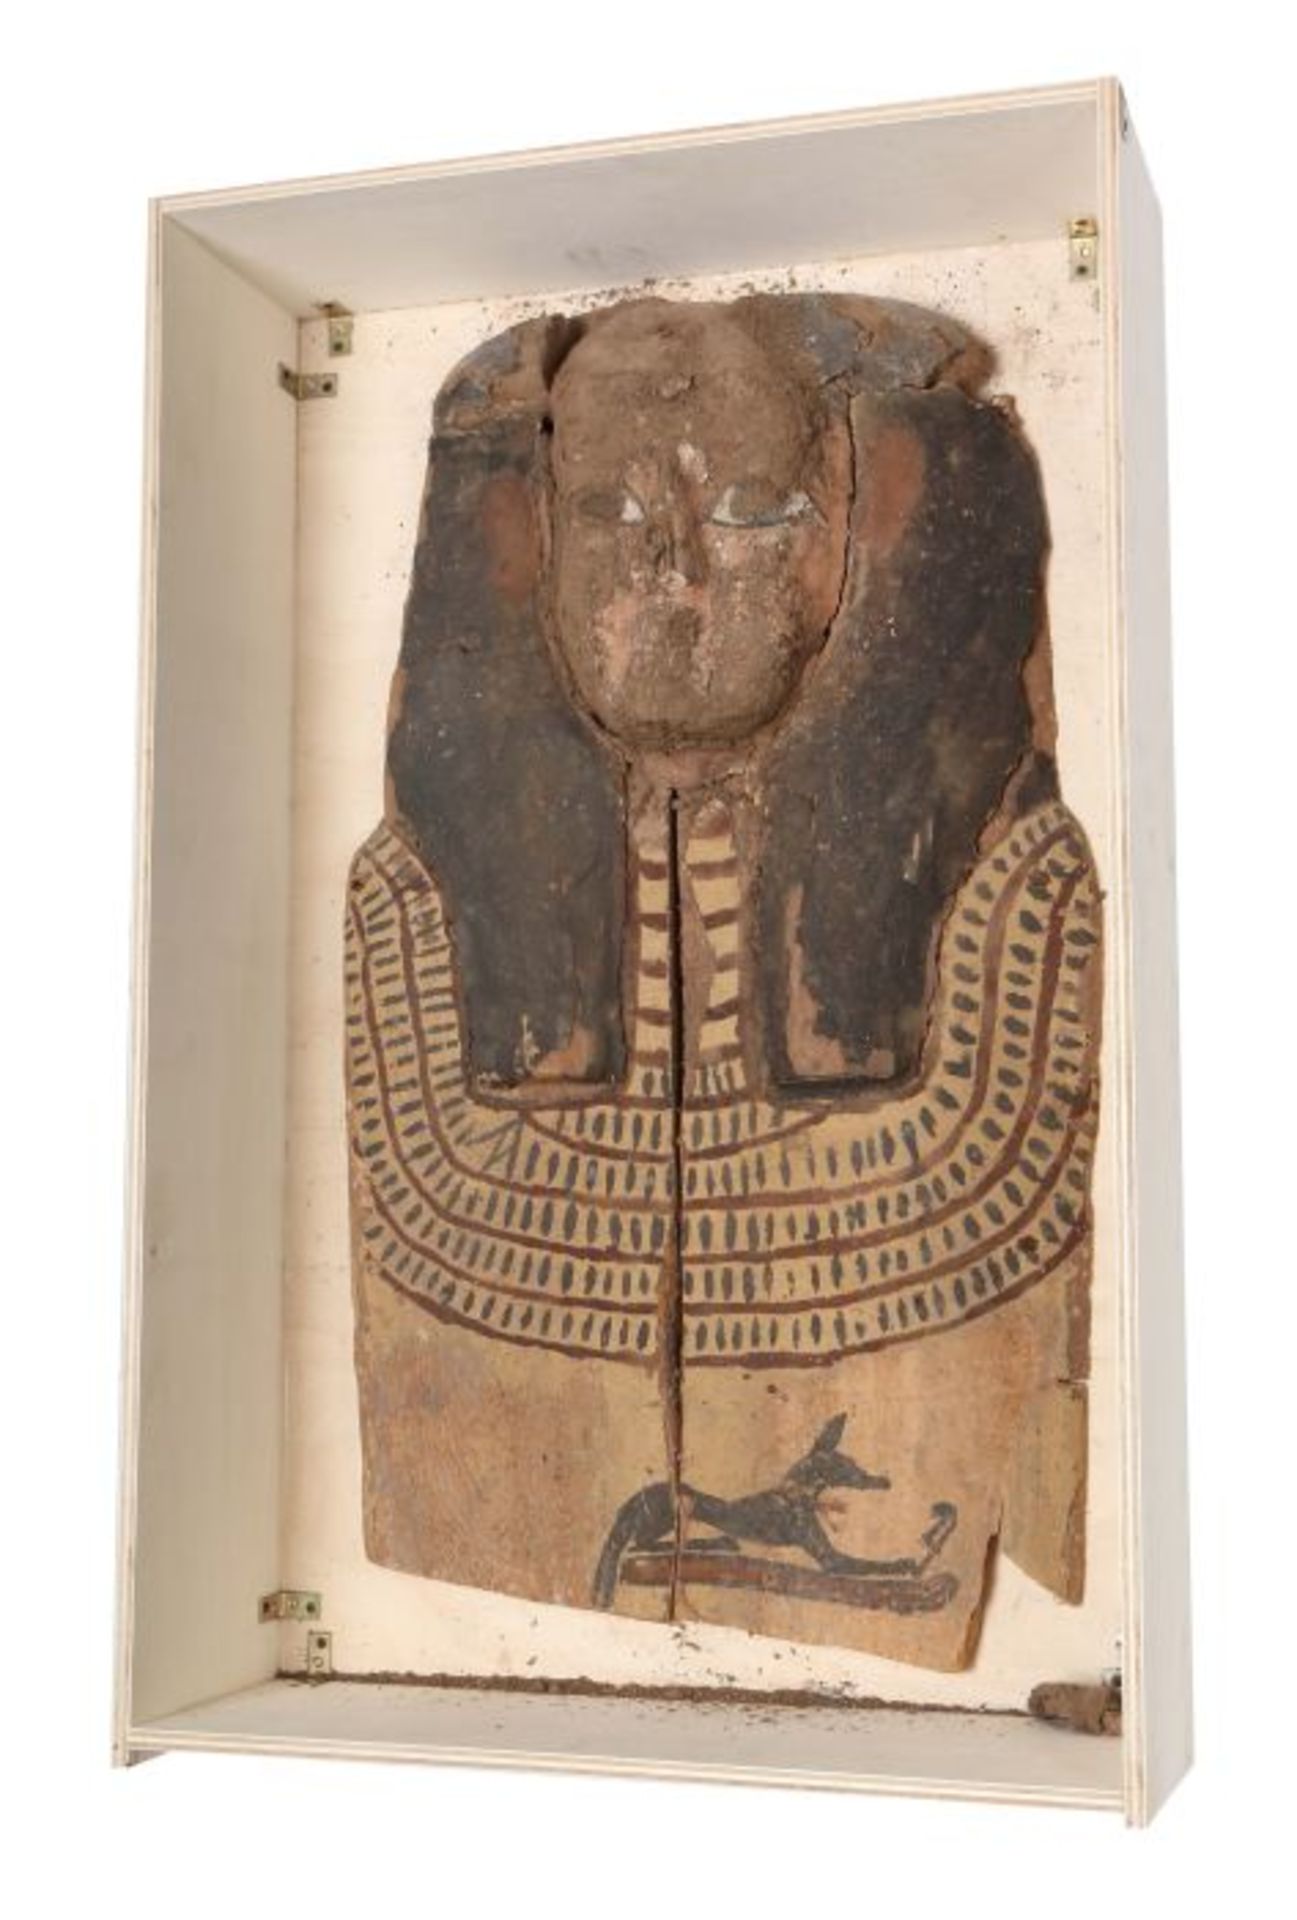 Sargdeckel-Fragment Ägypten, 4. Jh. v. Chr. oder jünger, Holz, oberes Stück eines anthropomorphen - Image 2 of 2